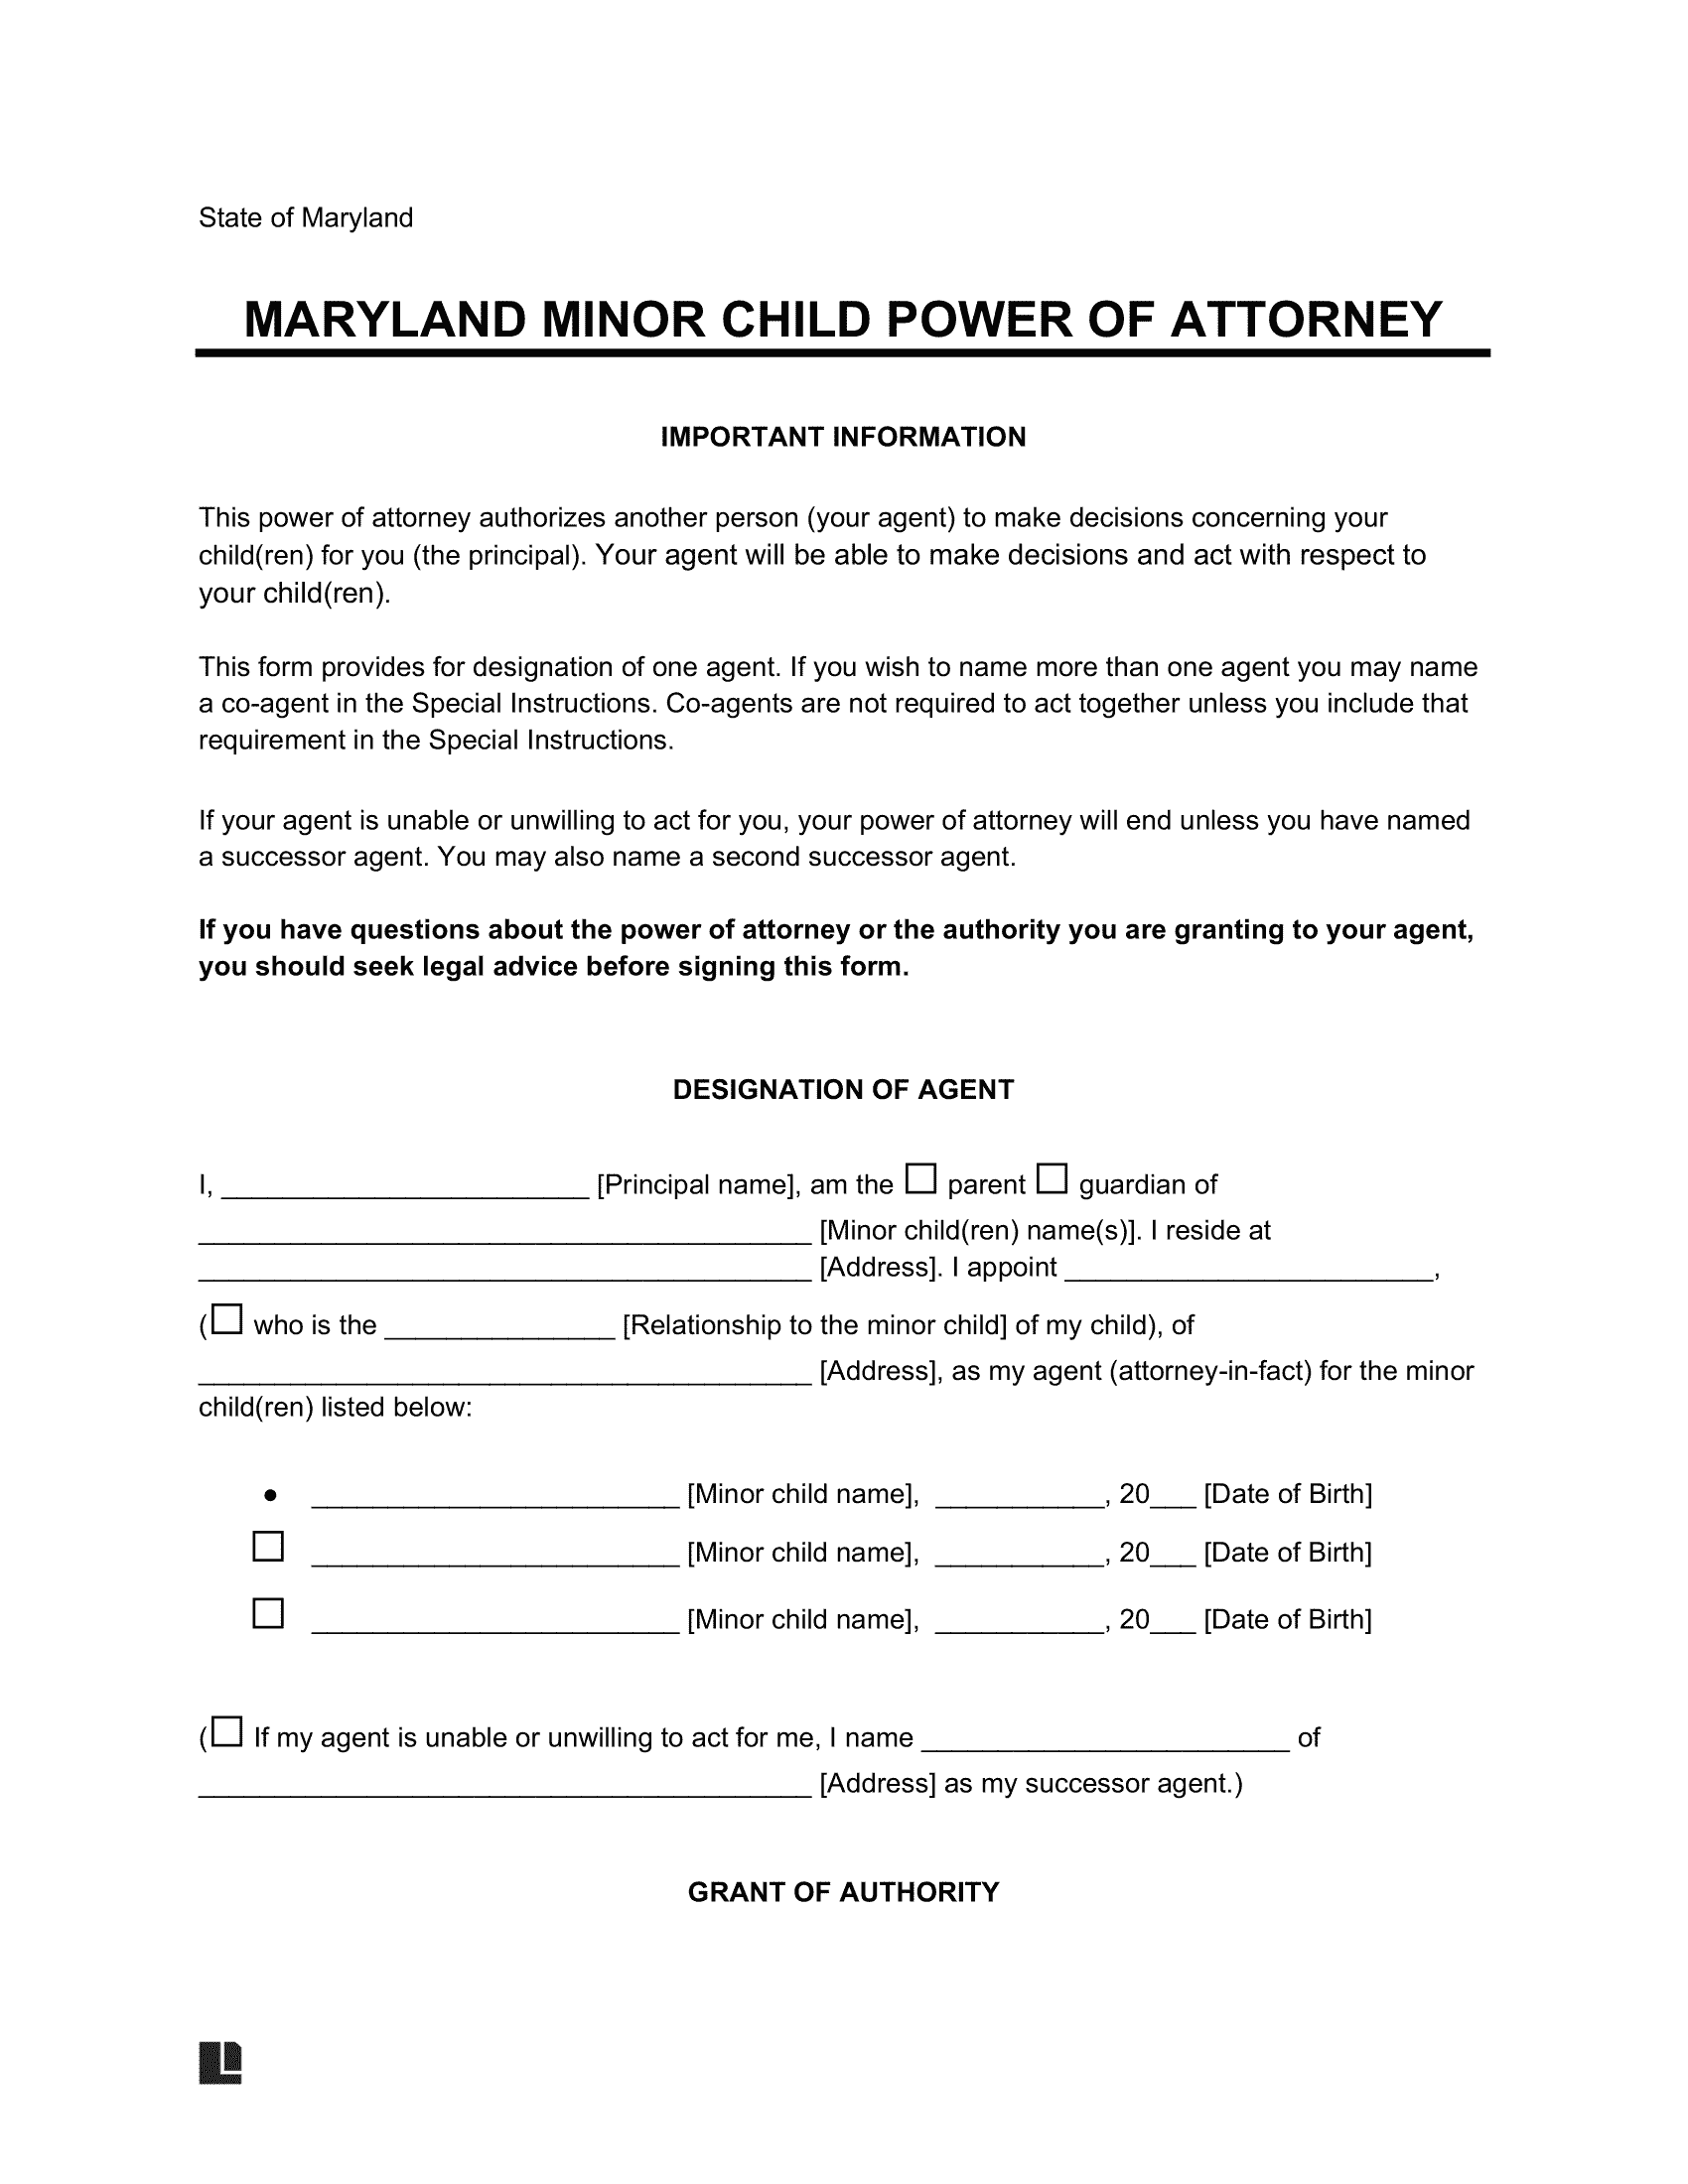 Maryland Minor Child Power of Attorney Form